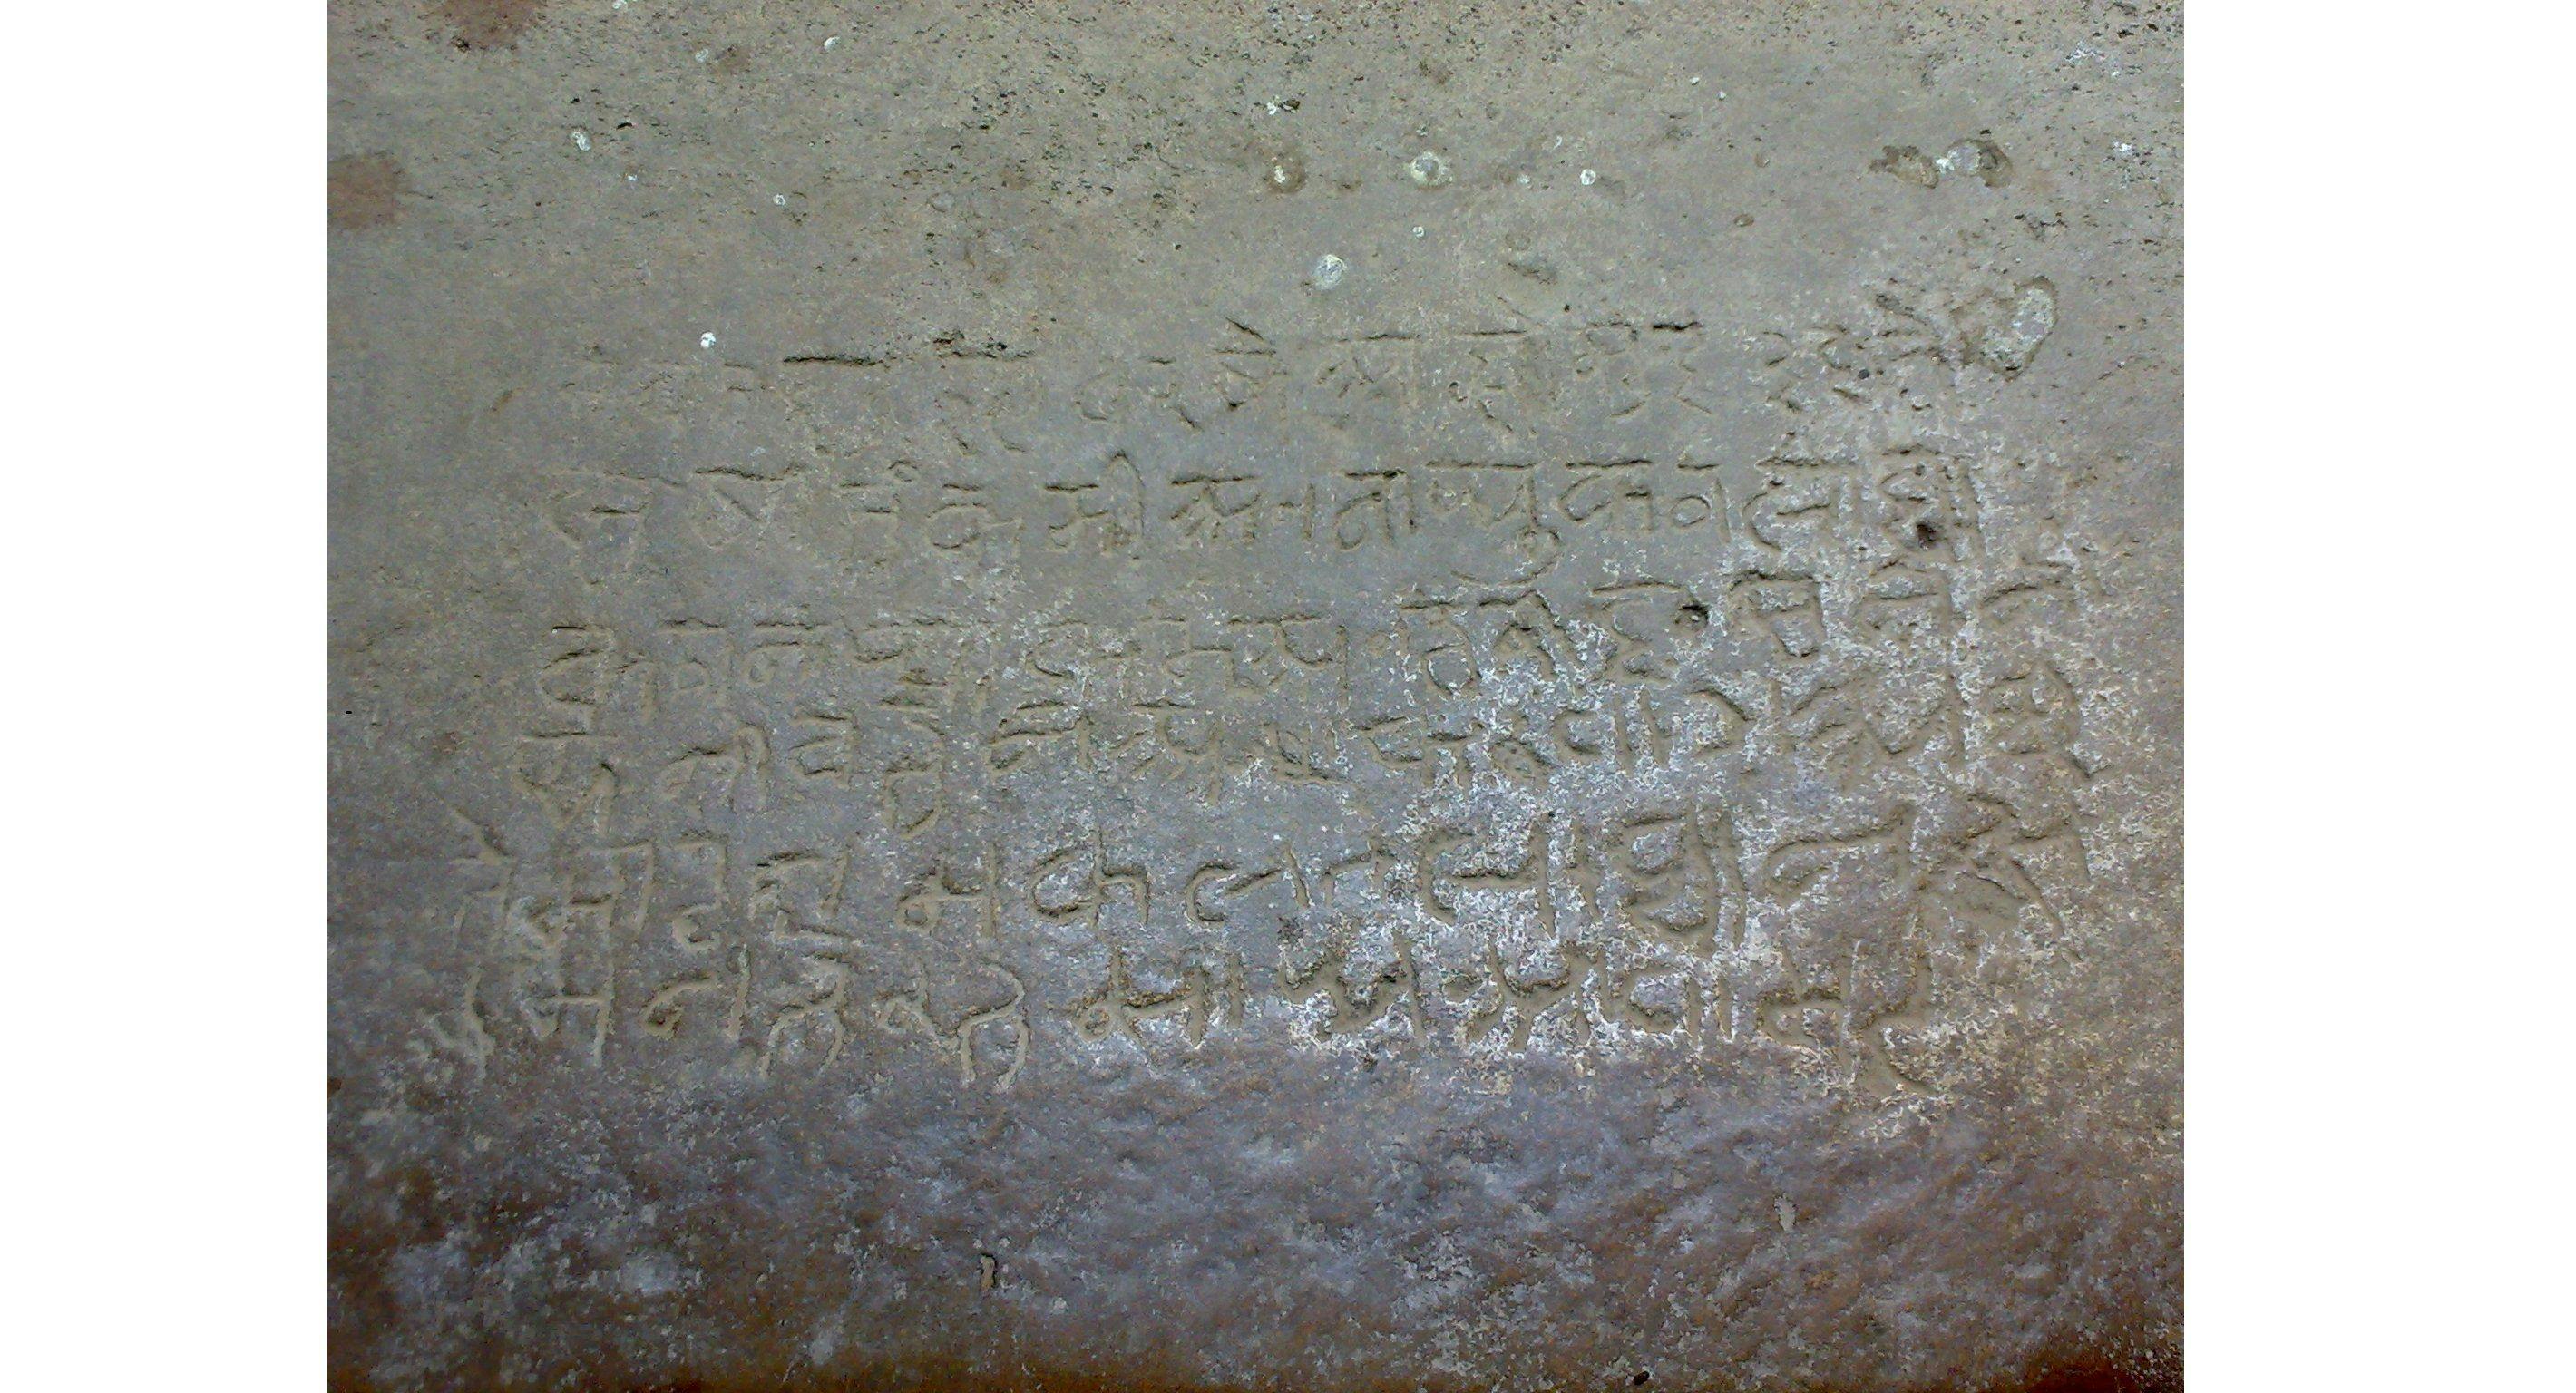 Sanskrit inscription